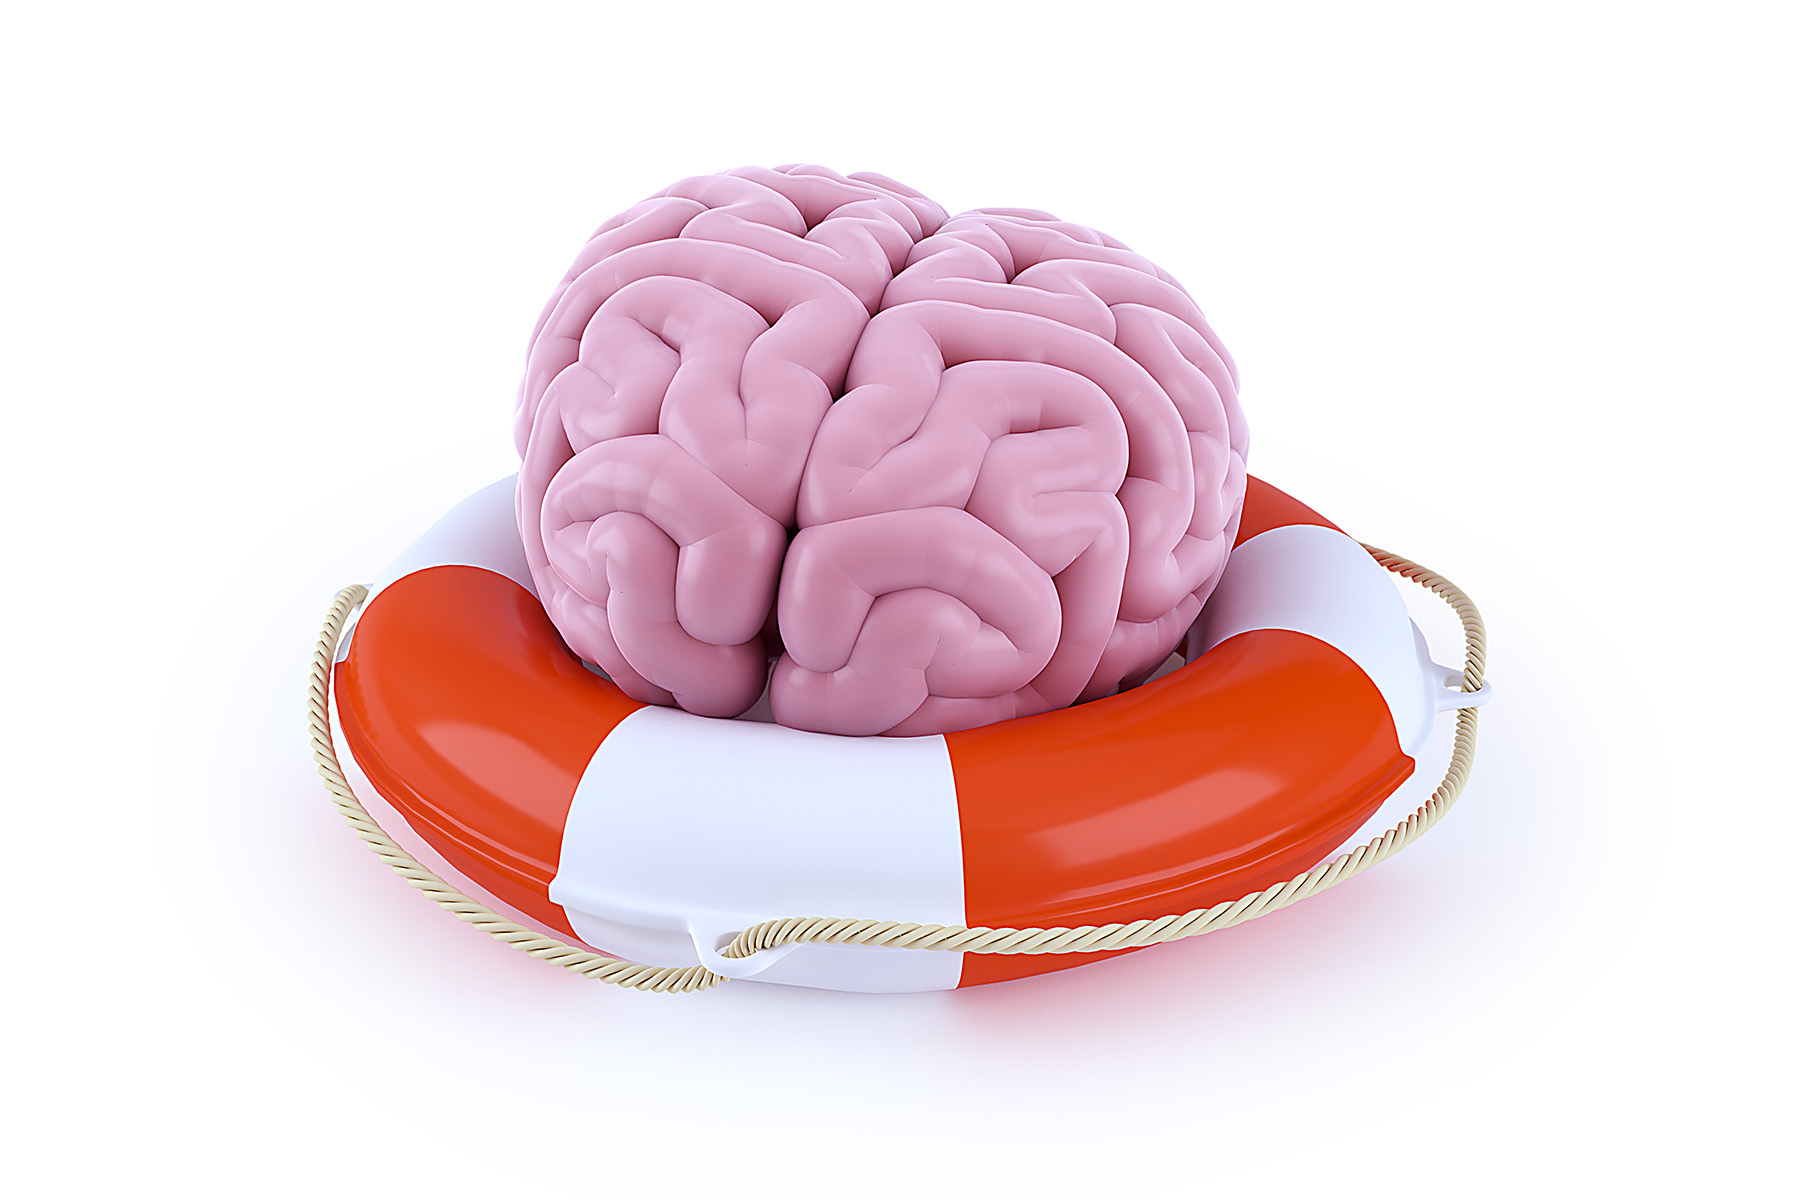 brain in life raft. Health concept